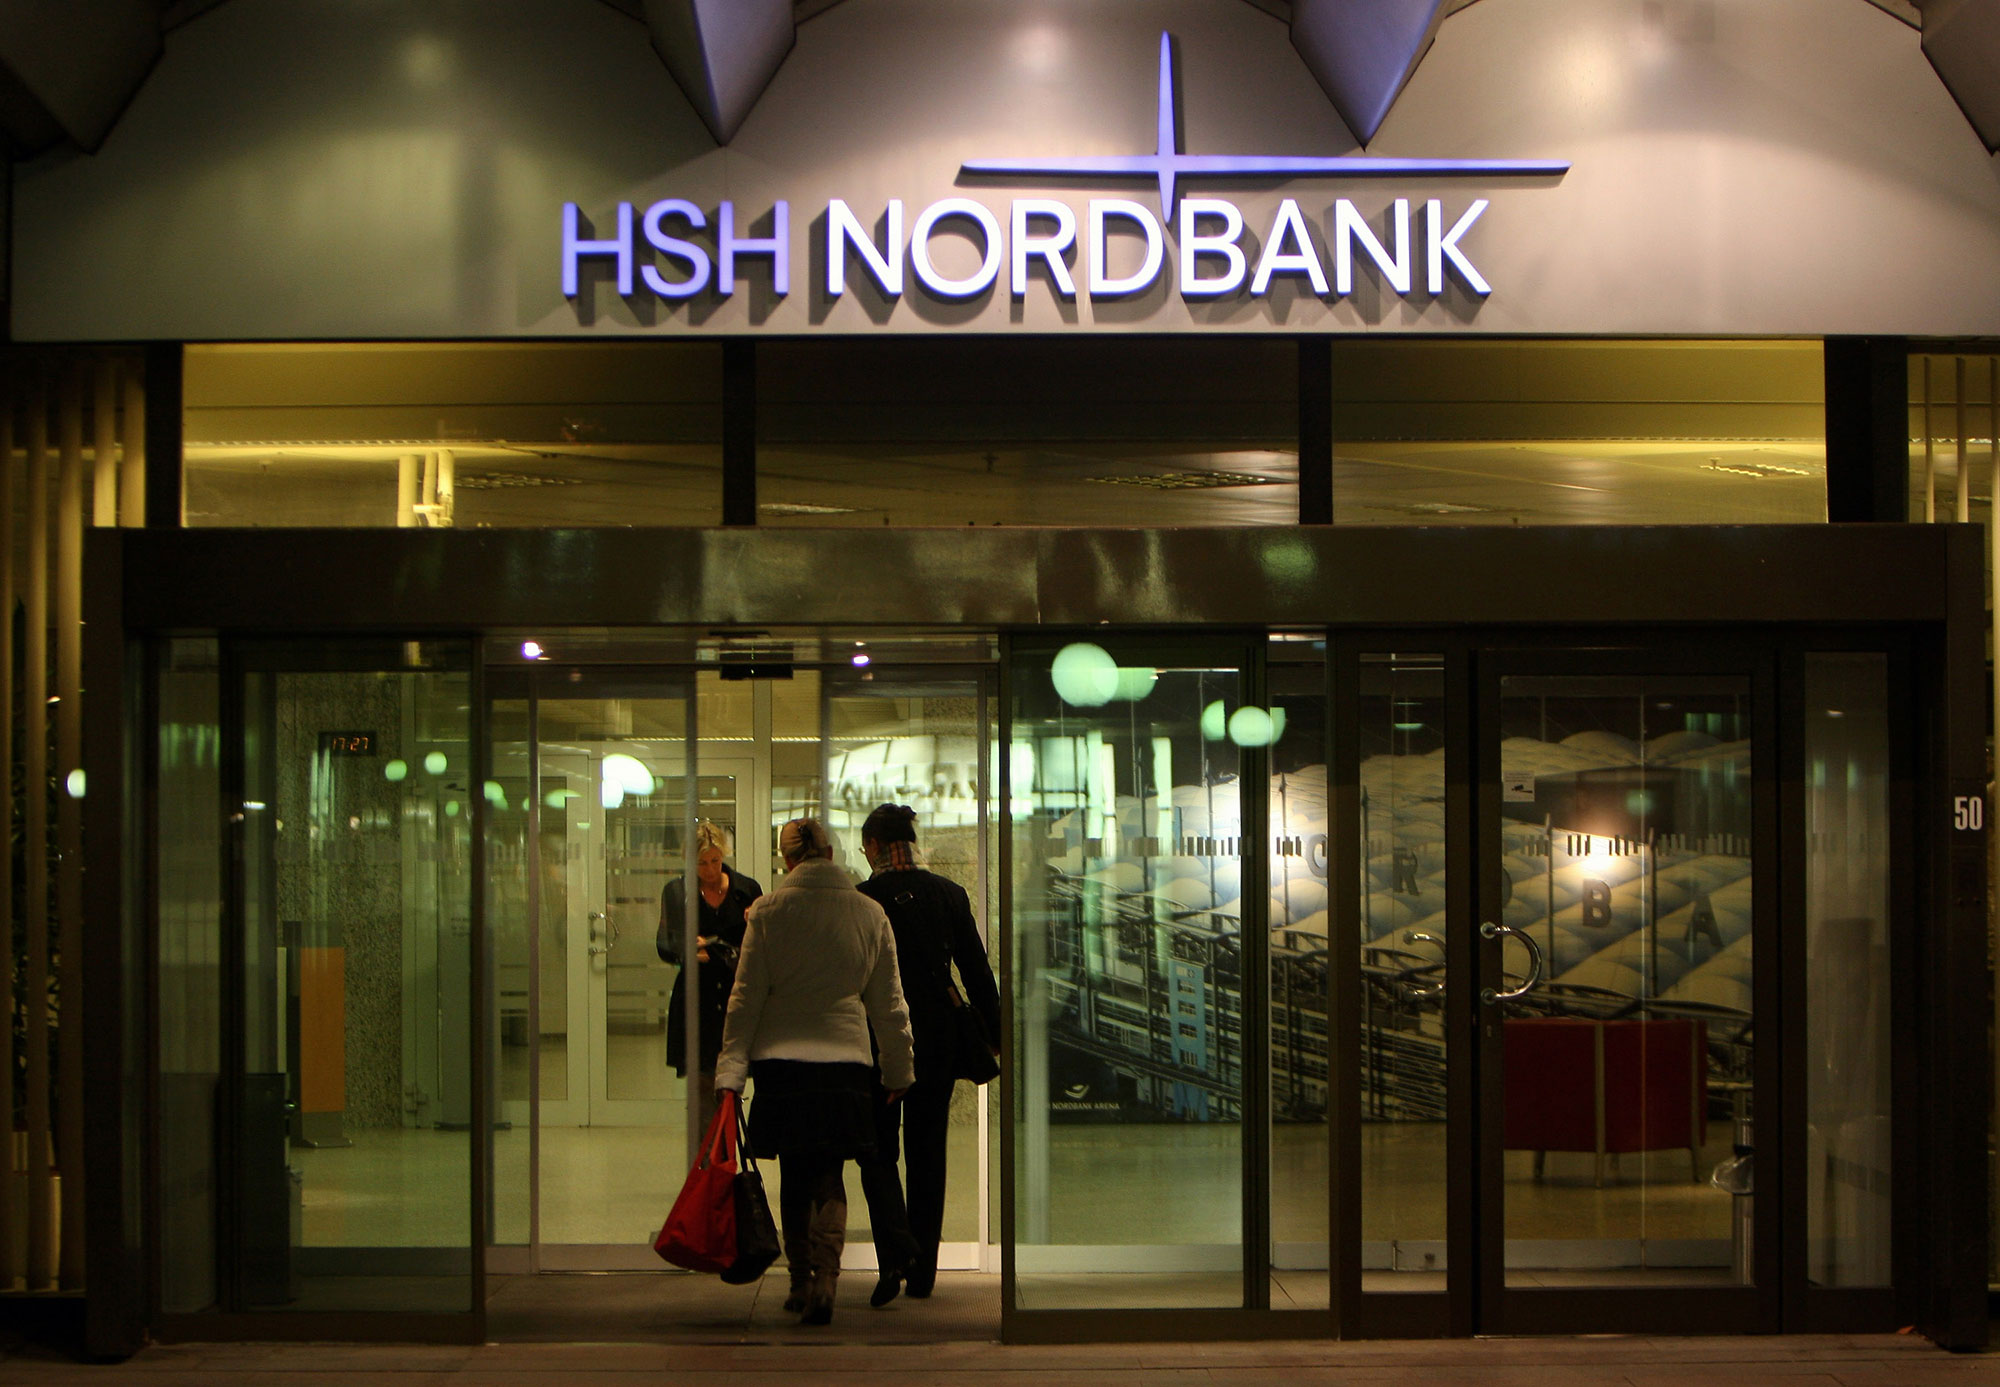 Cerberus Jc Flowers Agree To Buy Hsh Nordbank For 1 2 Billion Bloomberg